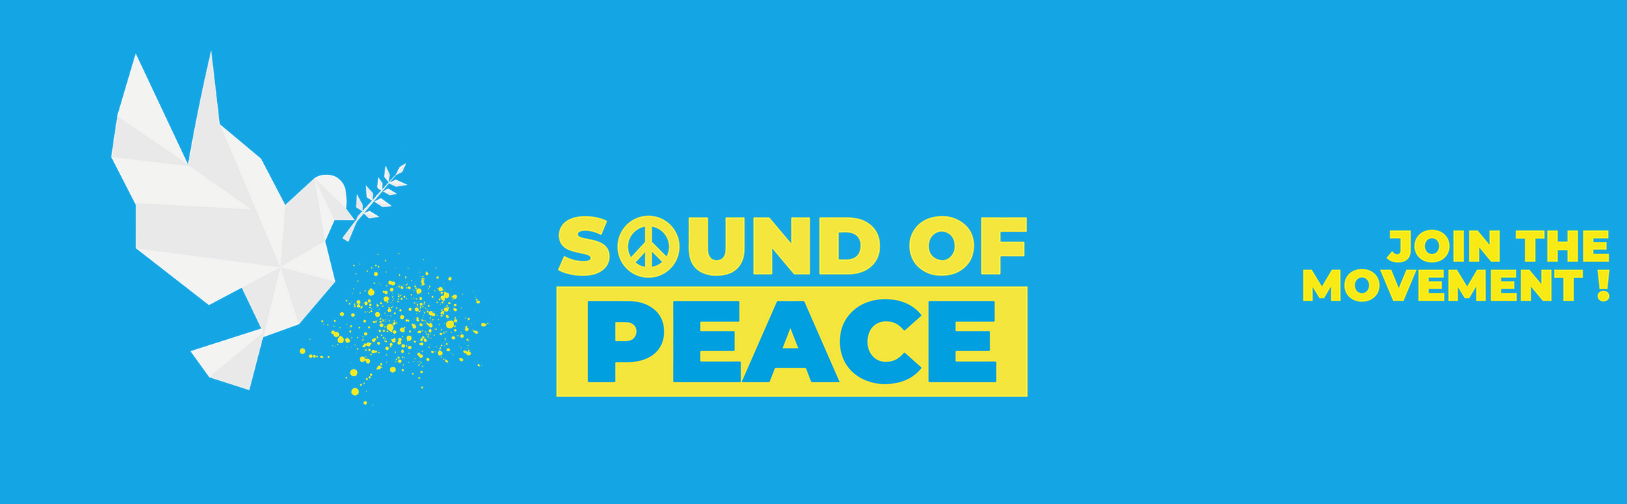 sound of peace